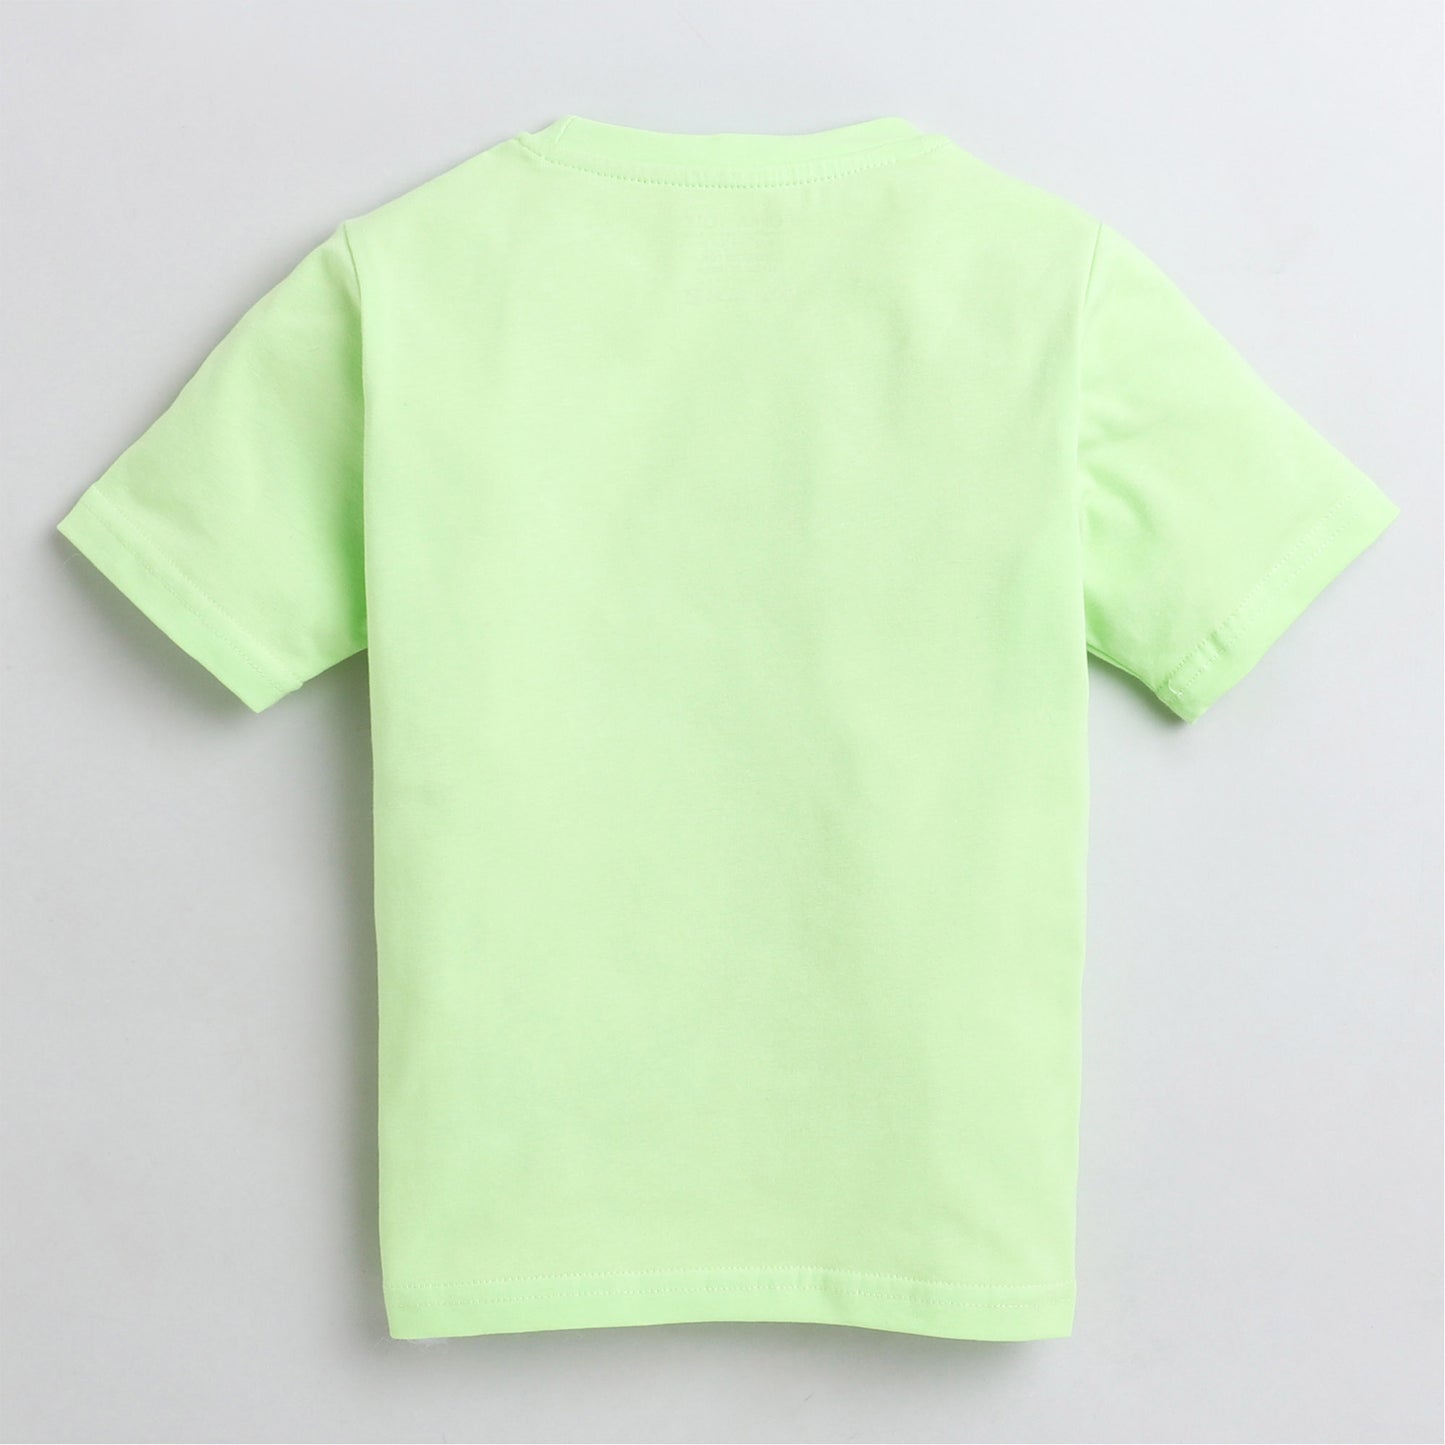 Polka Tots Half Sleeve T-Shirt Sailor In The Sea Whale - Green